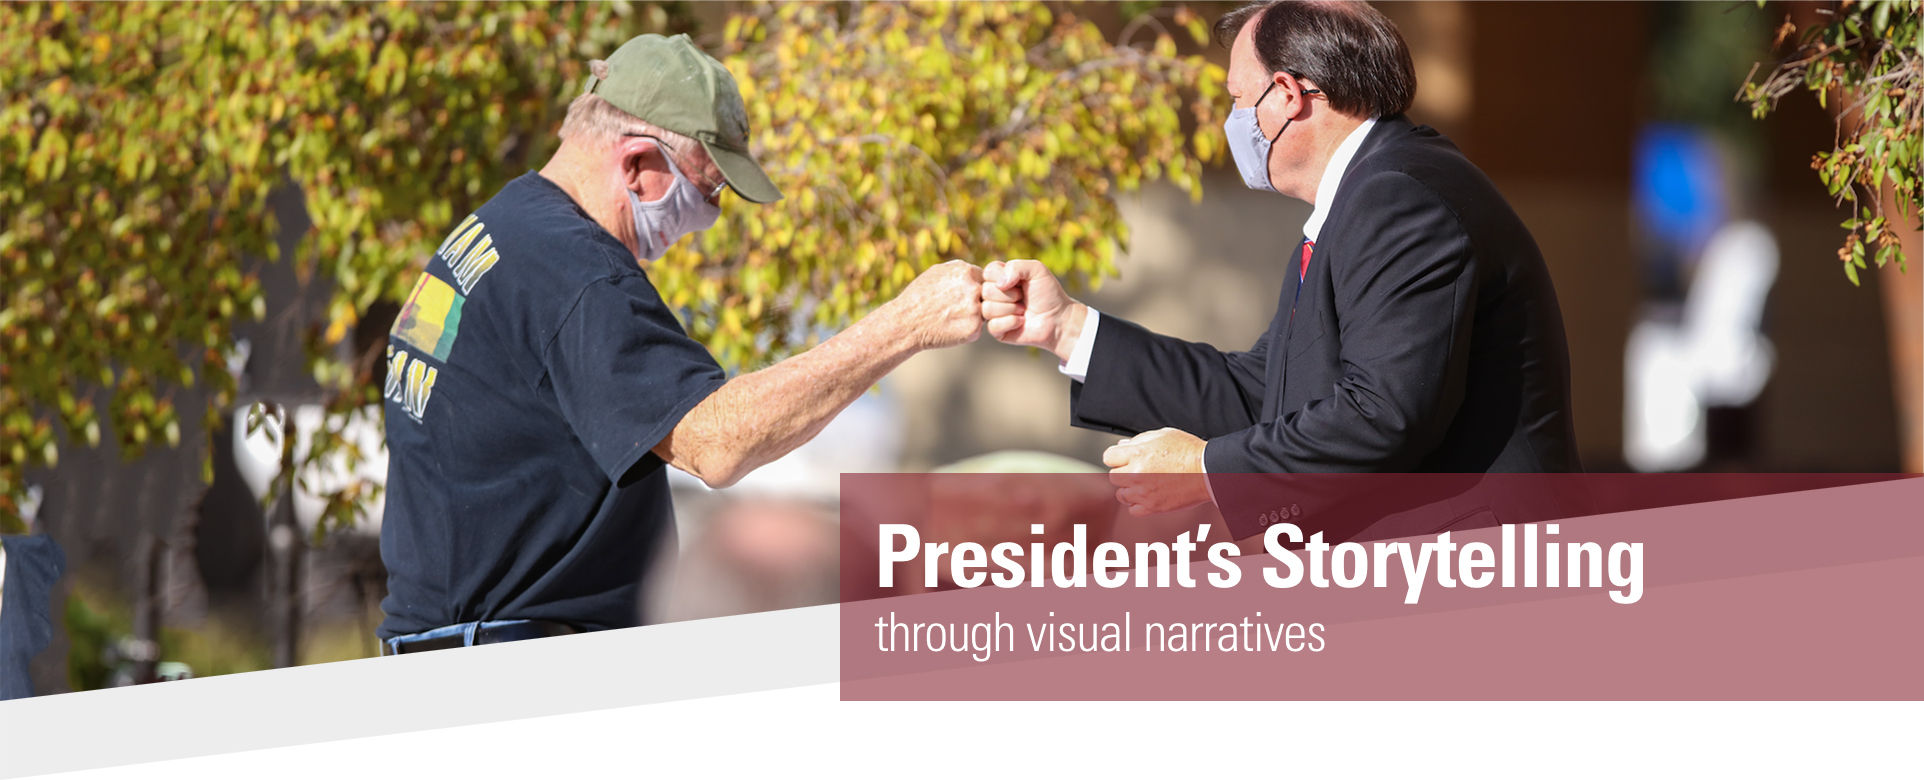 President's Storytelling through visual narratives